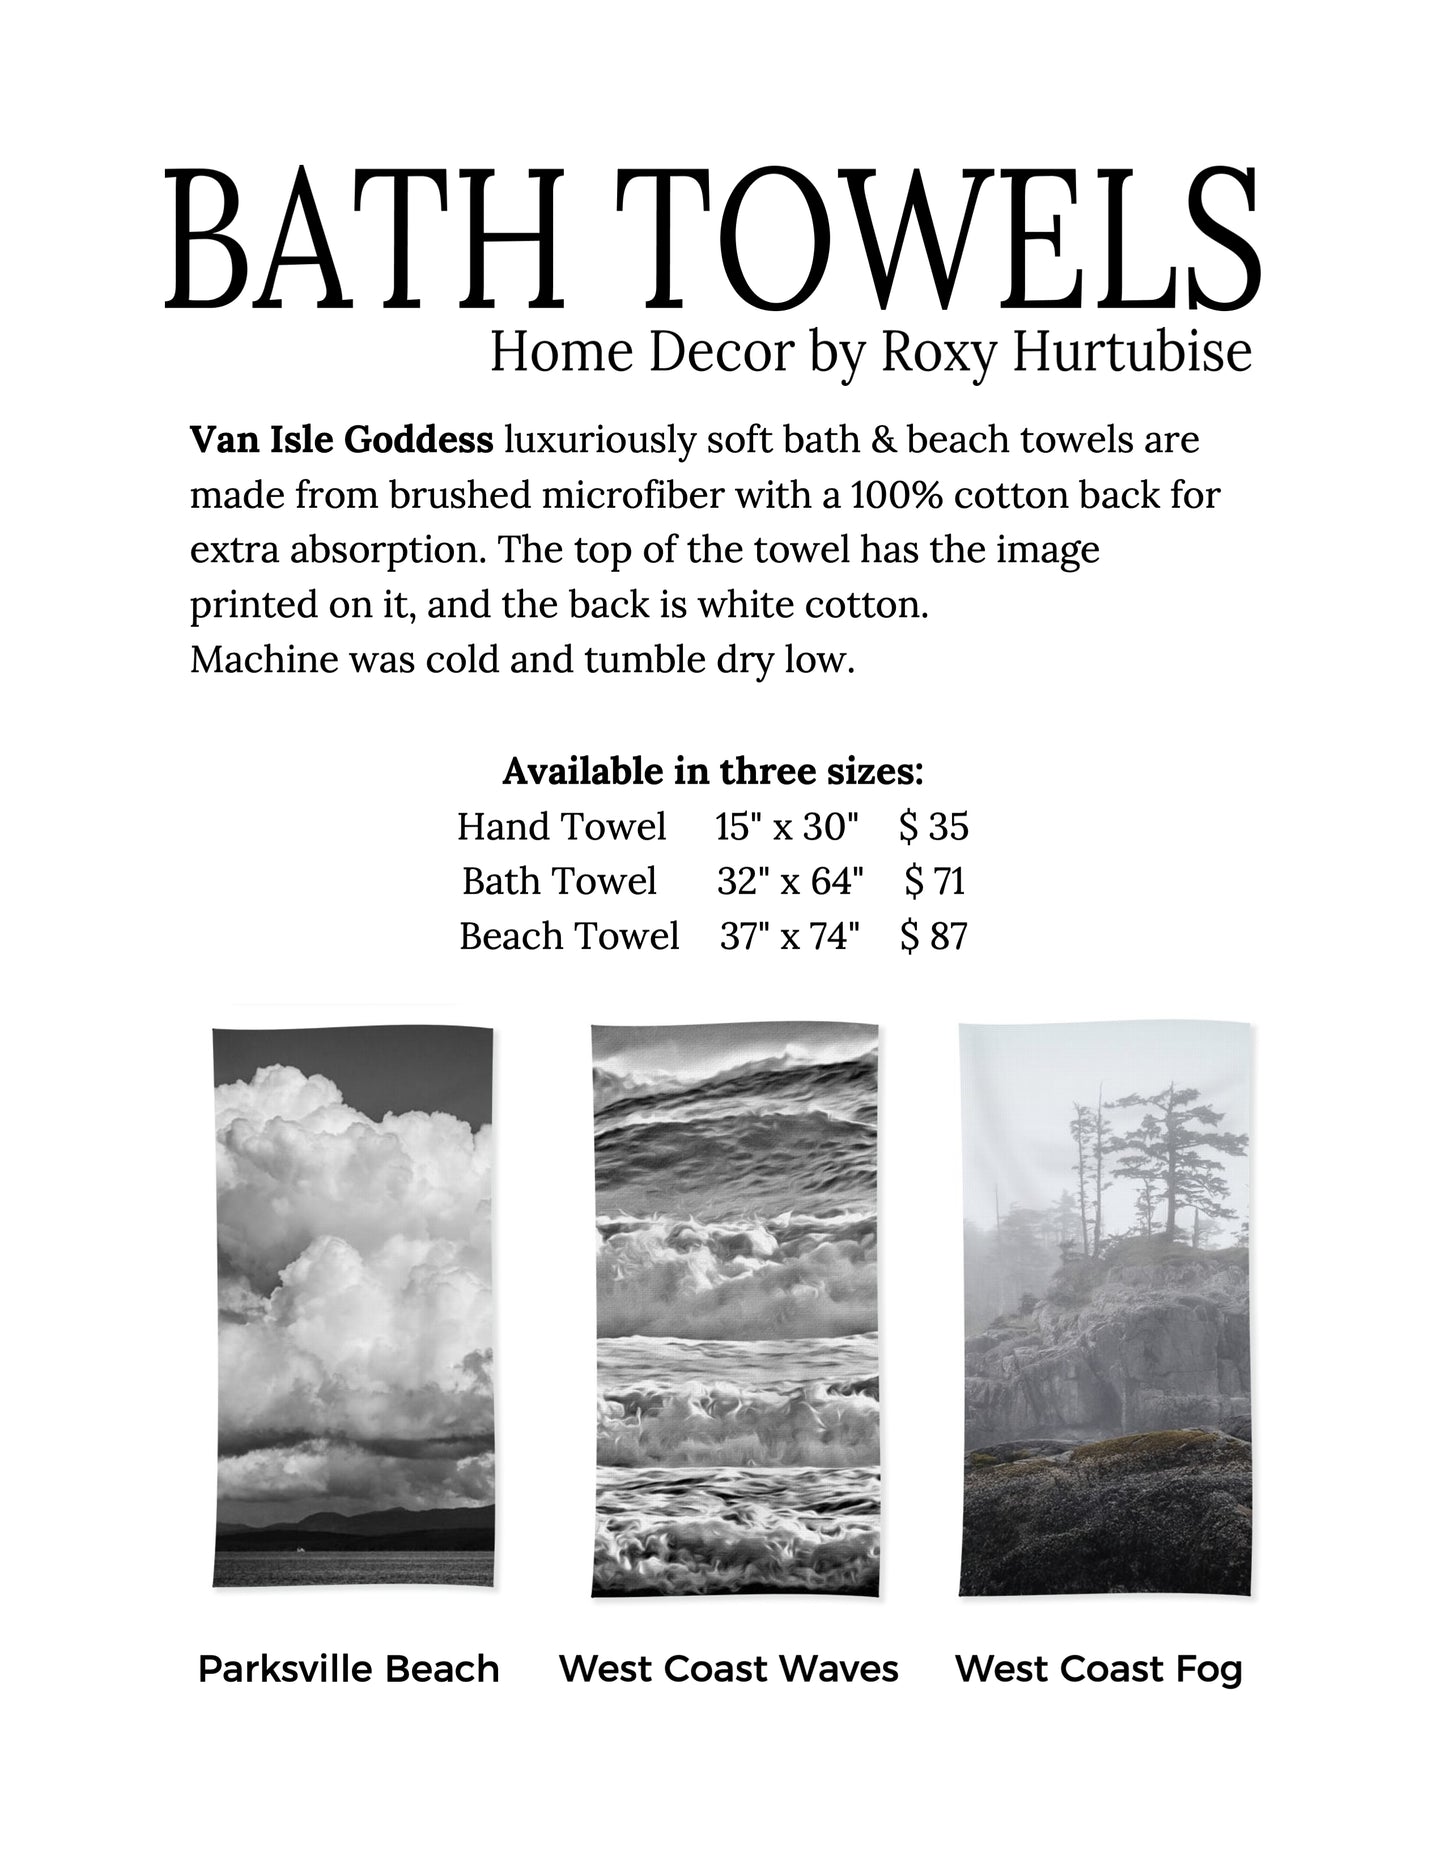 West Coast Waves Bath & Beach Towels